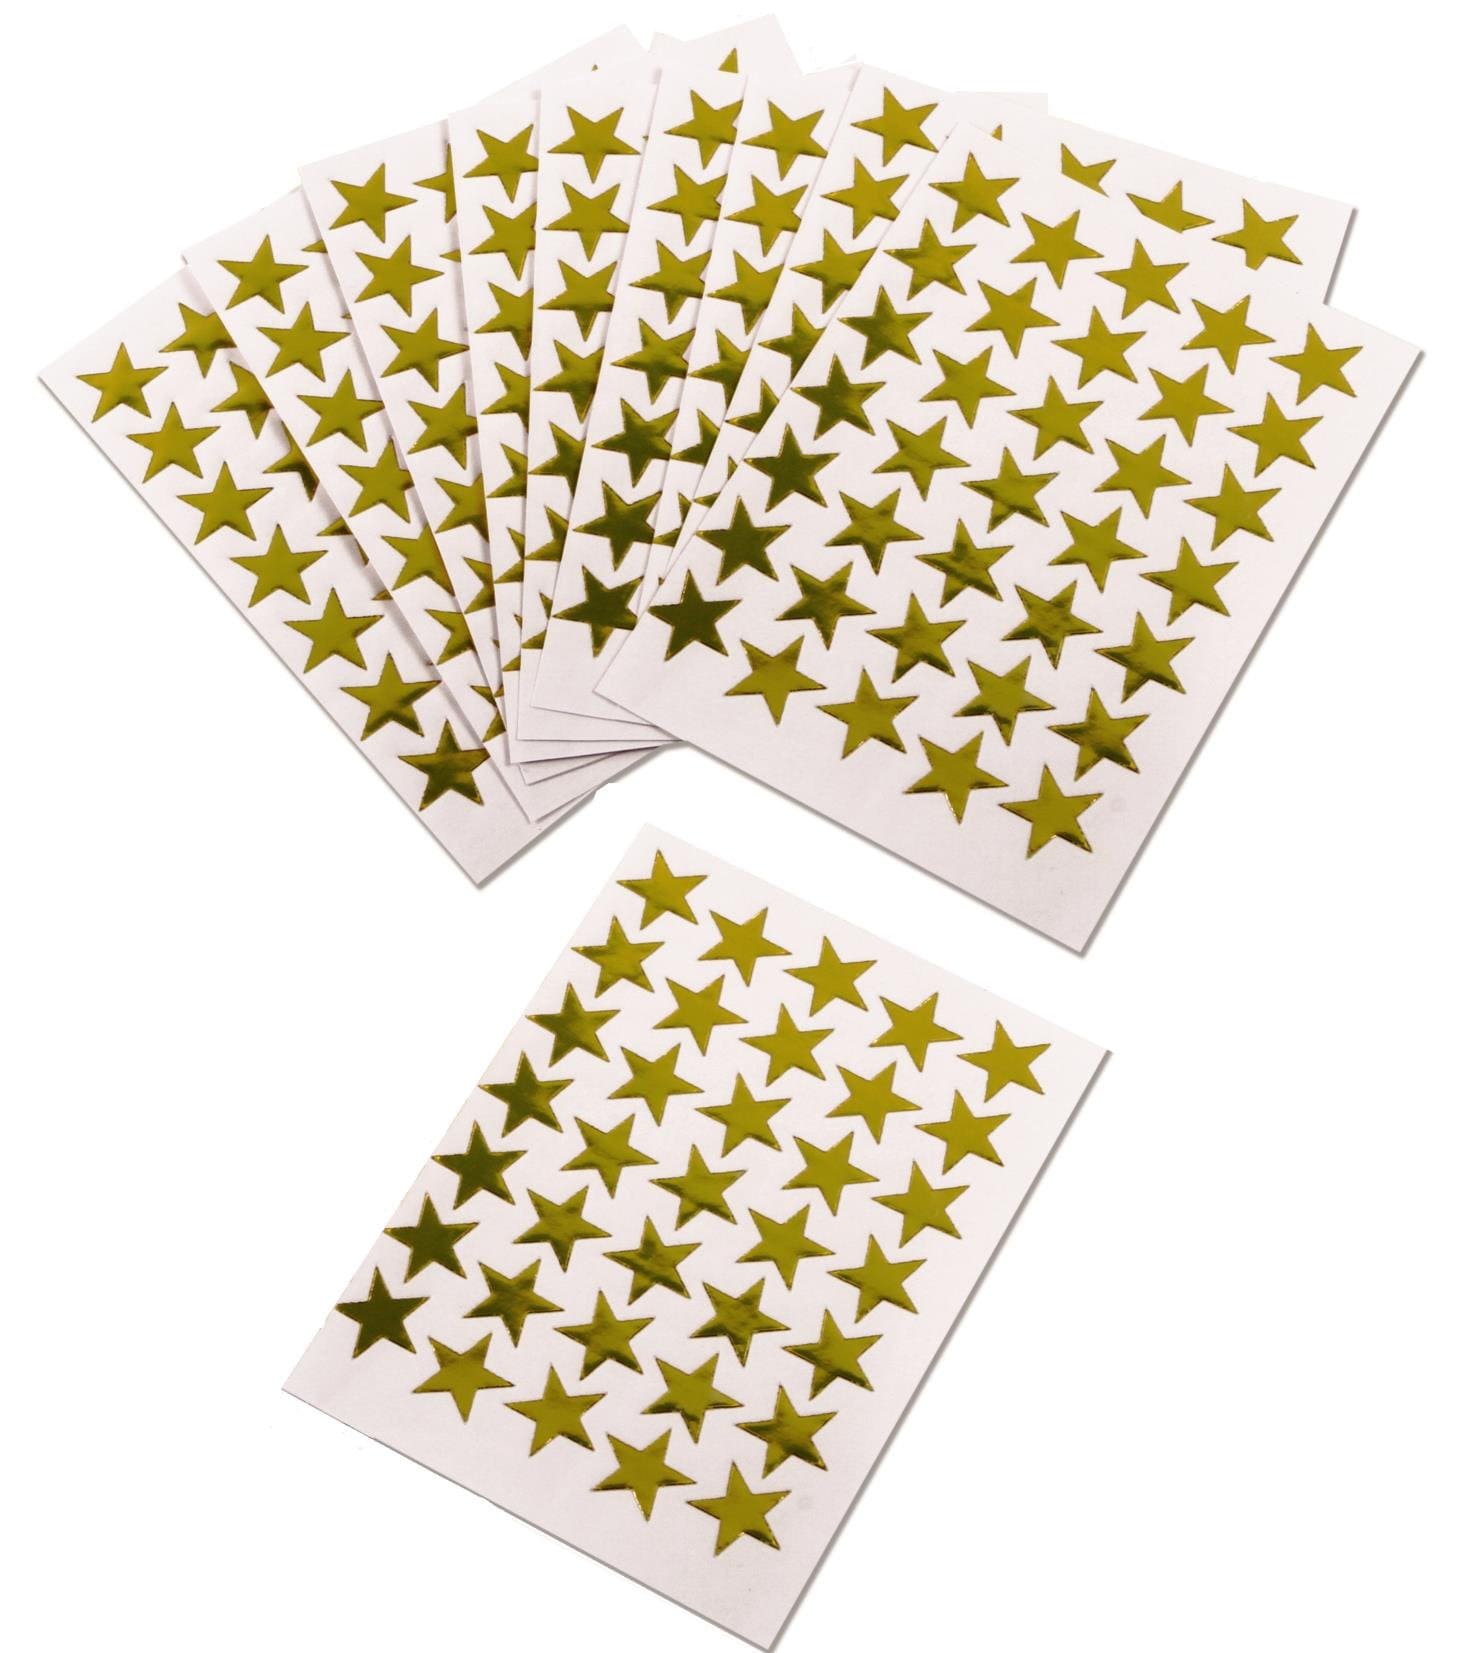 10 Sheets School Teacher Office Merit Reward Gold Star Self-adhesive Sticker 